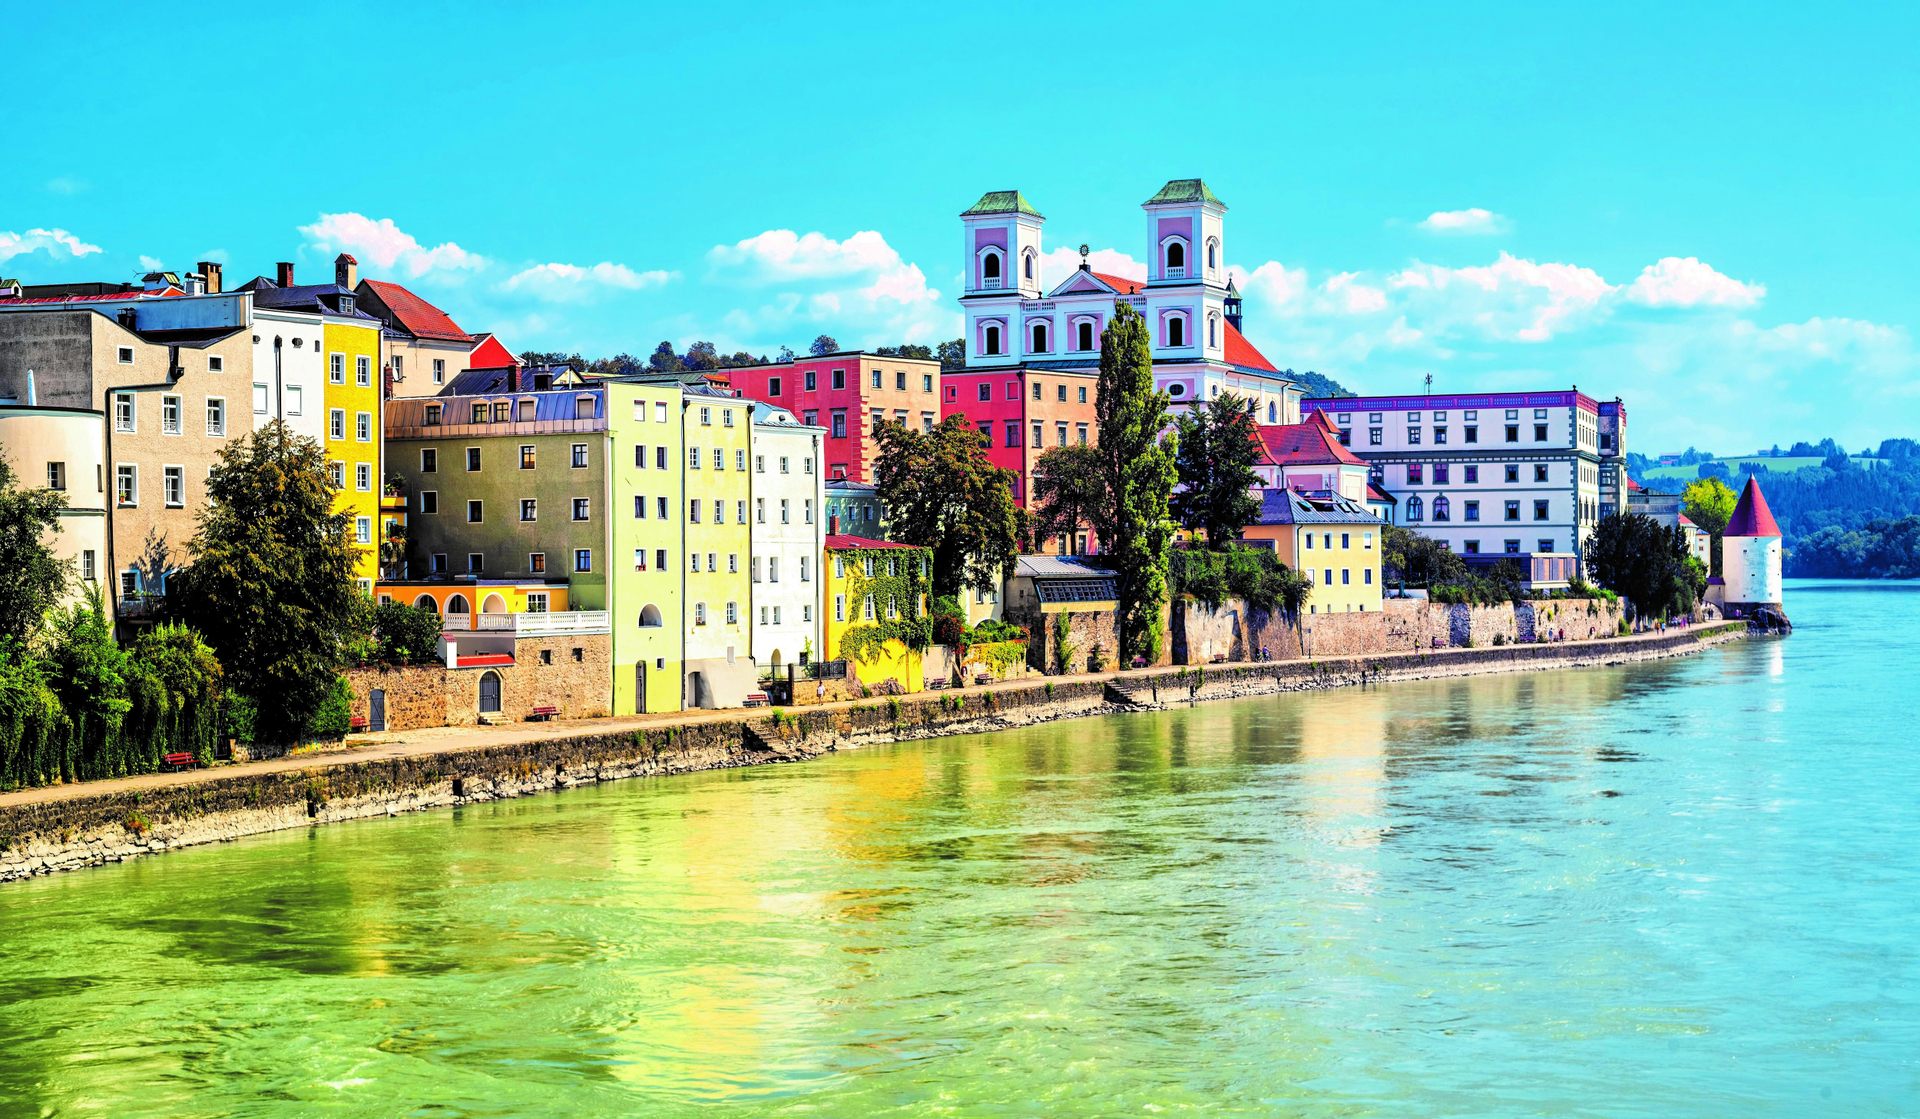 Return Transfer to Passau